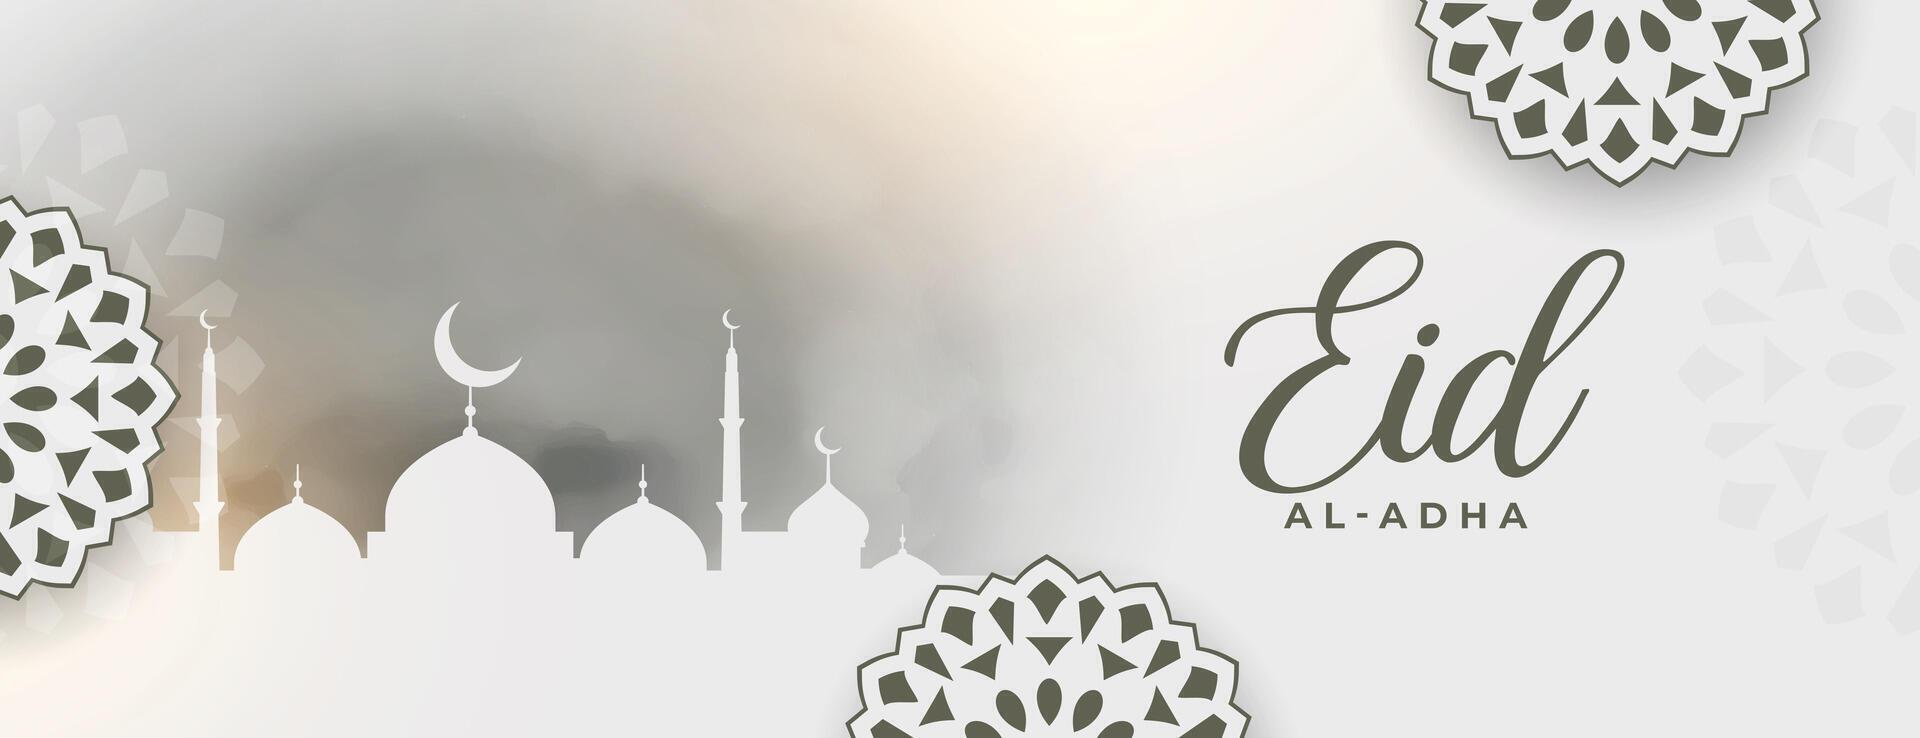 eid al adha Muslim Festival Banner Design vektor